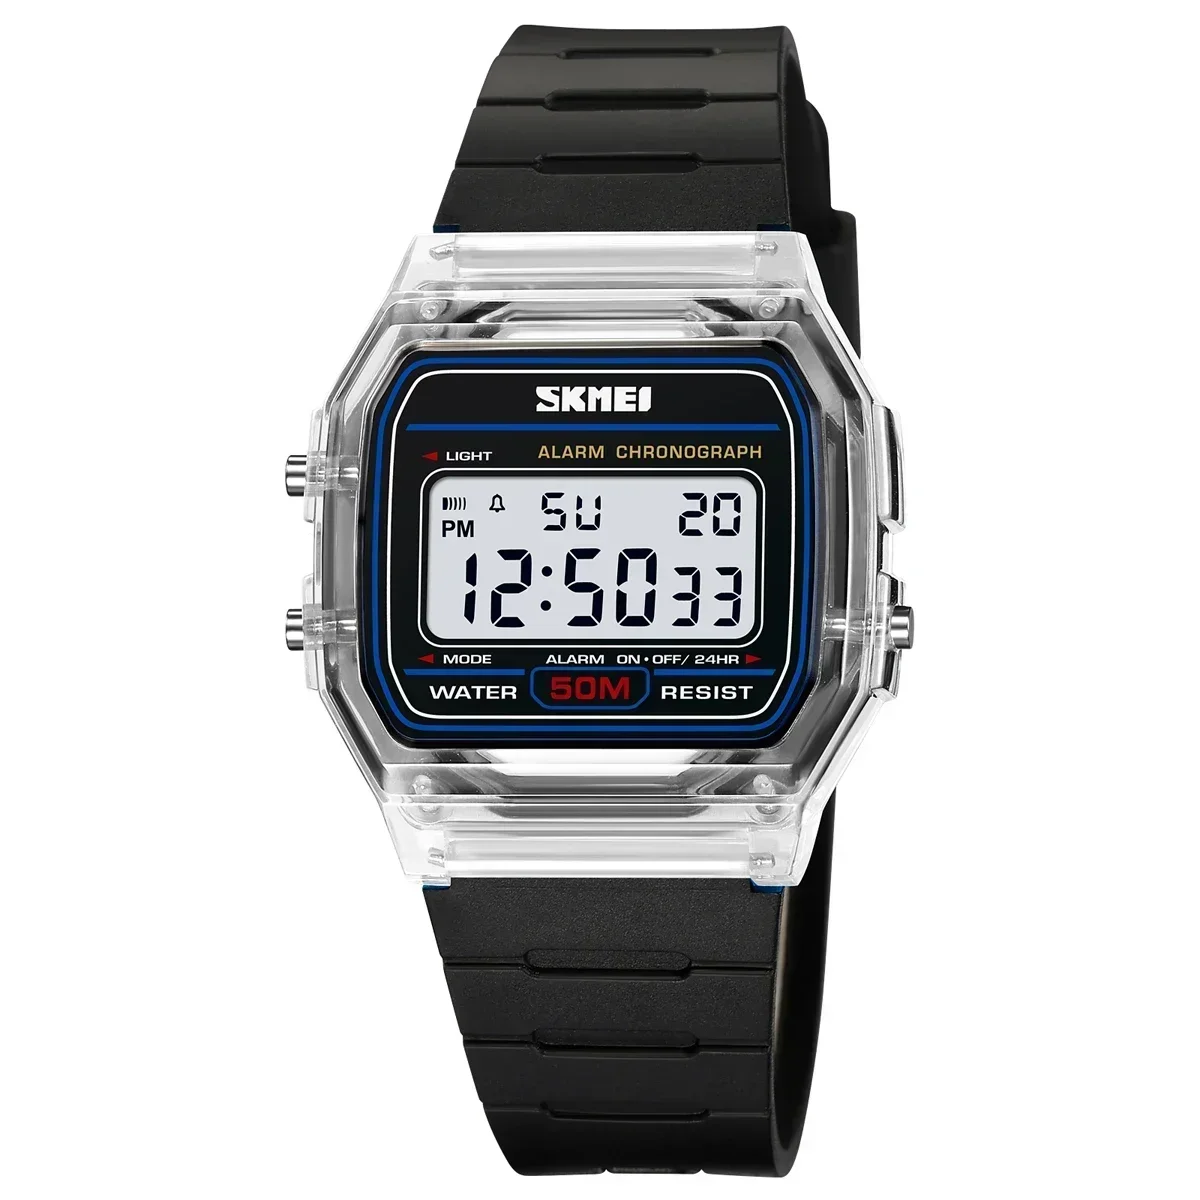 Shockproof Back Light Display Stopwatch Digital Watches Women reloj muje... - $16.81